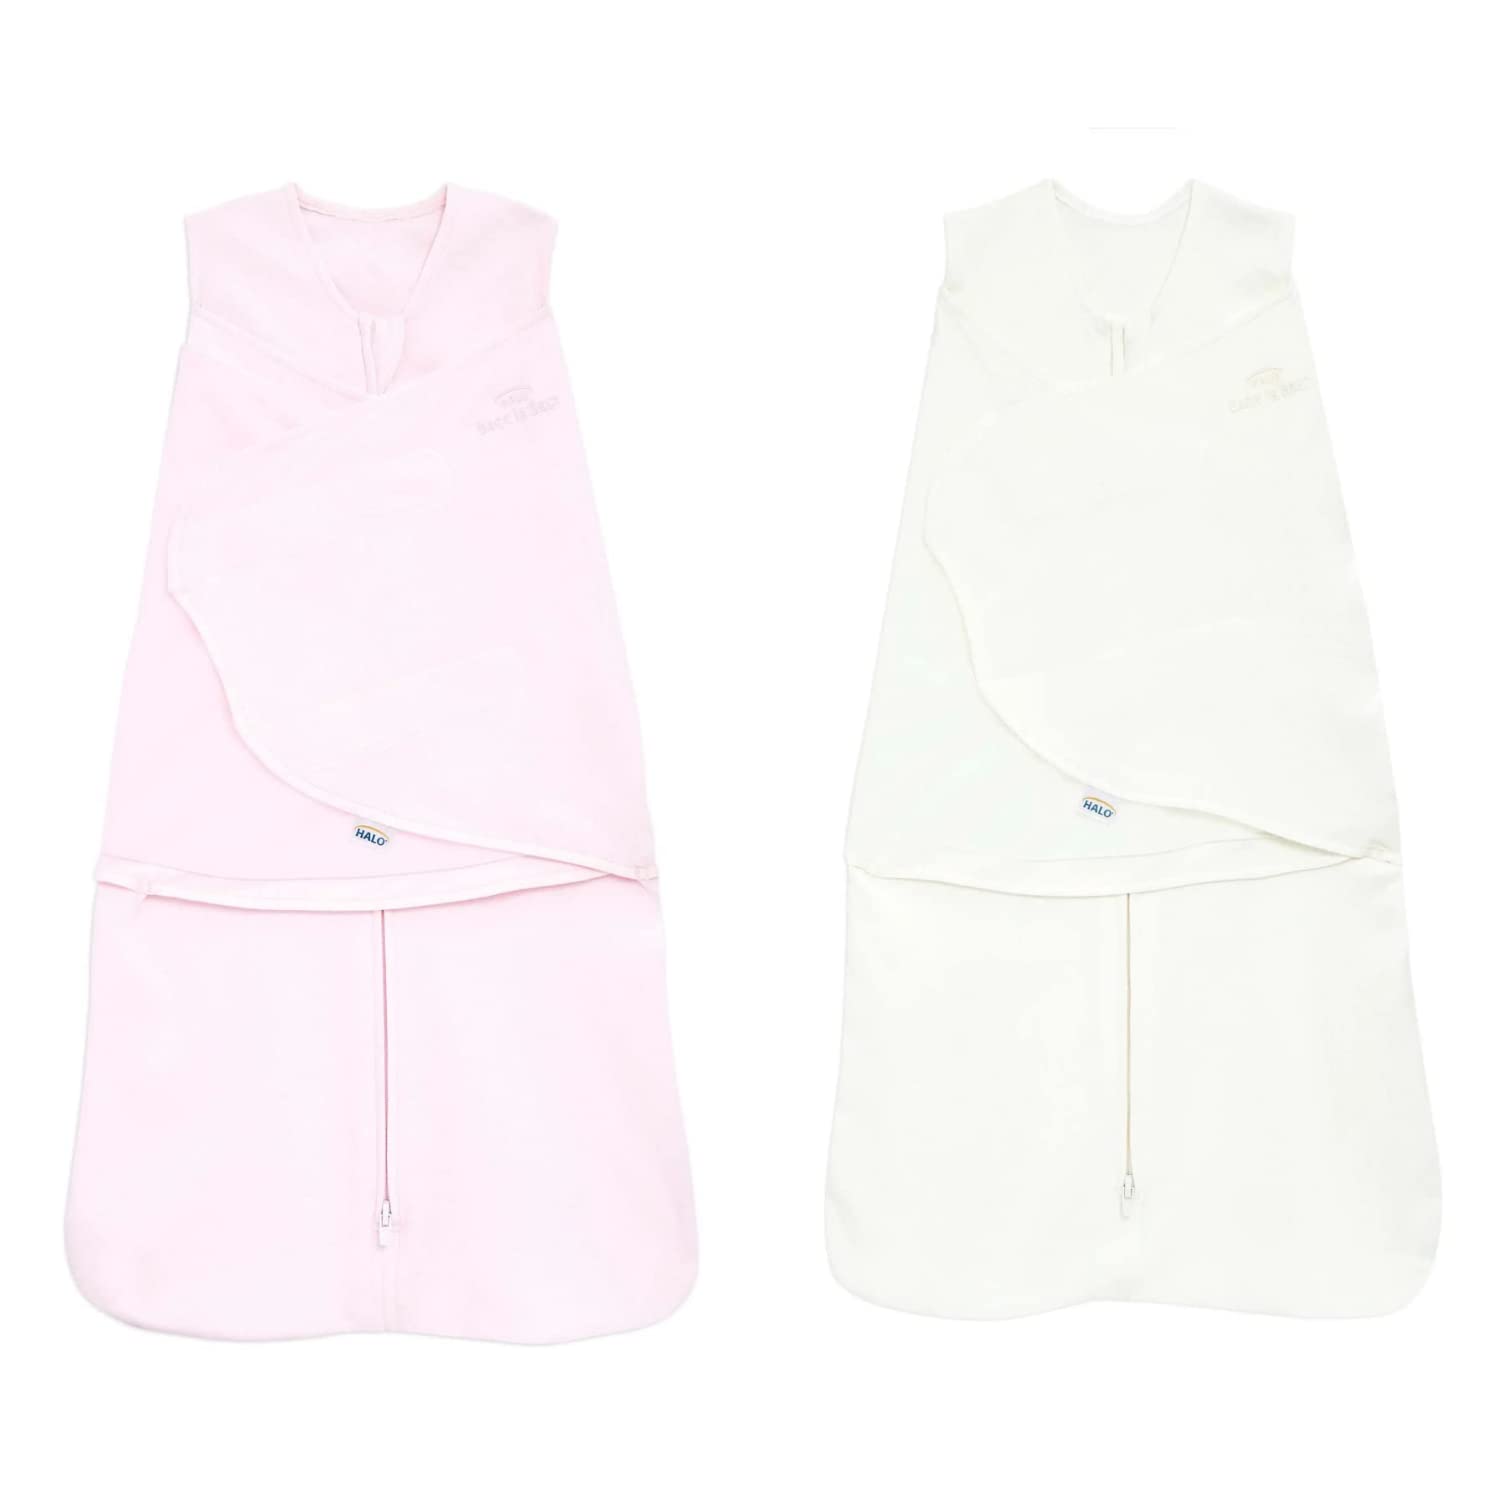 HALO 100% Cotton Sleepsack Swaddle, 3-Way Adjustable Wearable Blanket, TOG 1.5, Newborn, Soft Pink & Cream Bundle